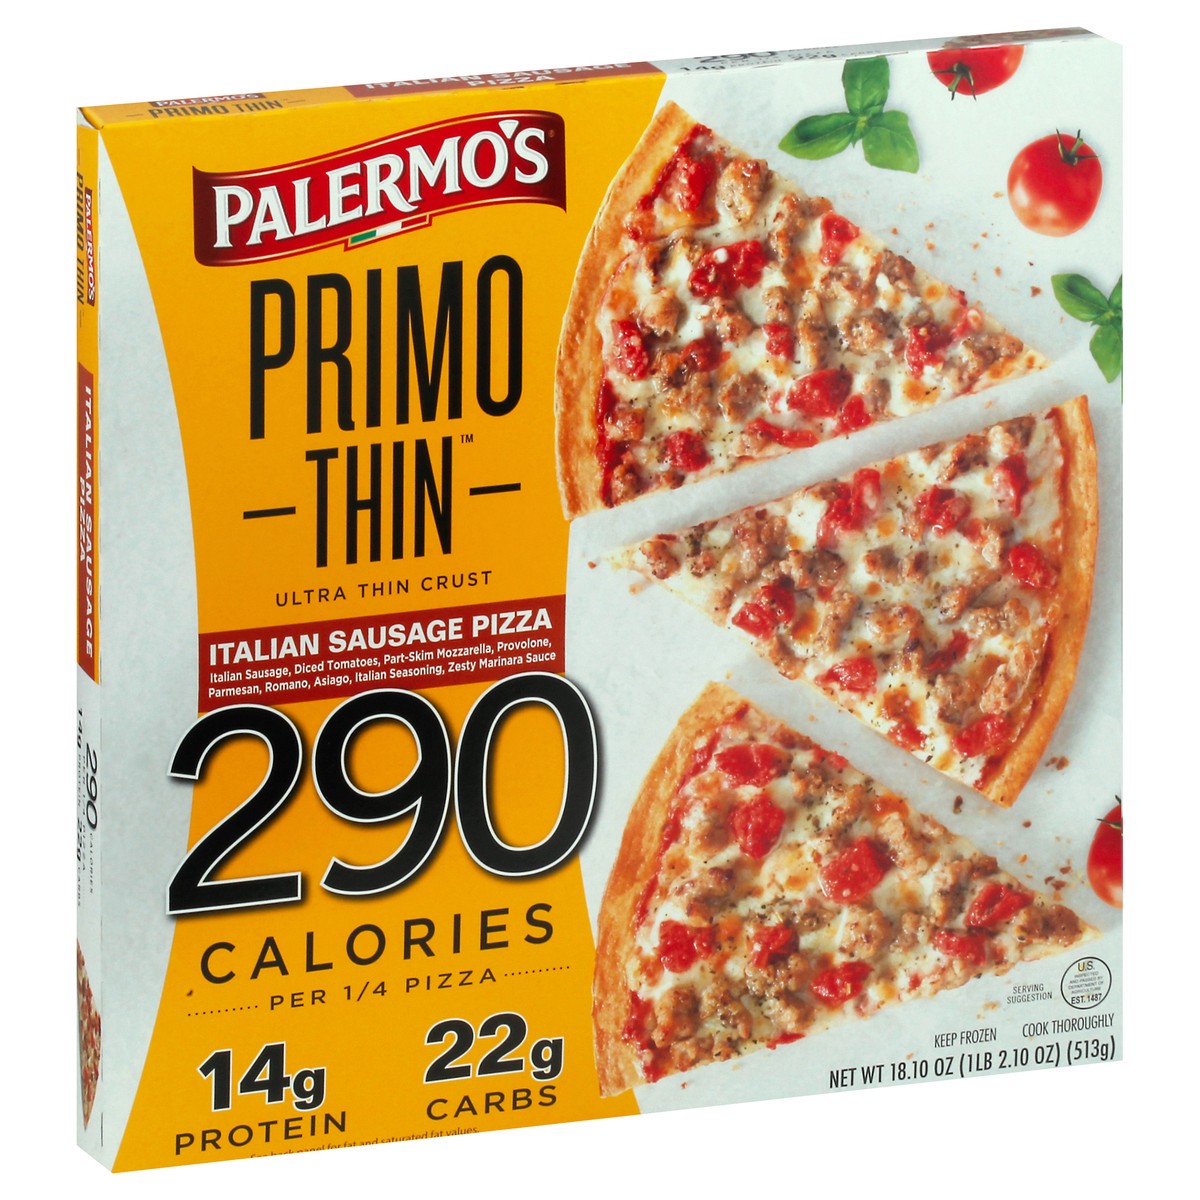 slide 8 of 9, Palermo's Primo Thin Ultra Thin Crust Italian Sausage Pizza 18.1 oz, 18.1 oz